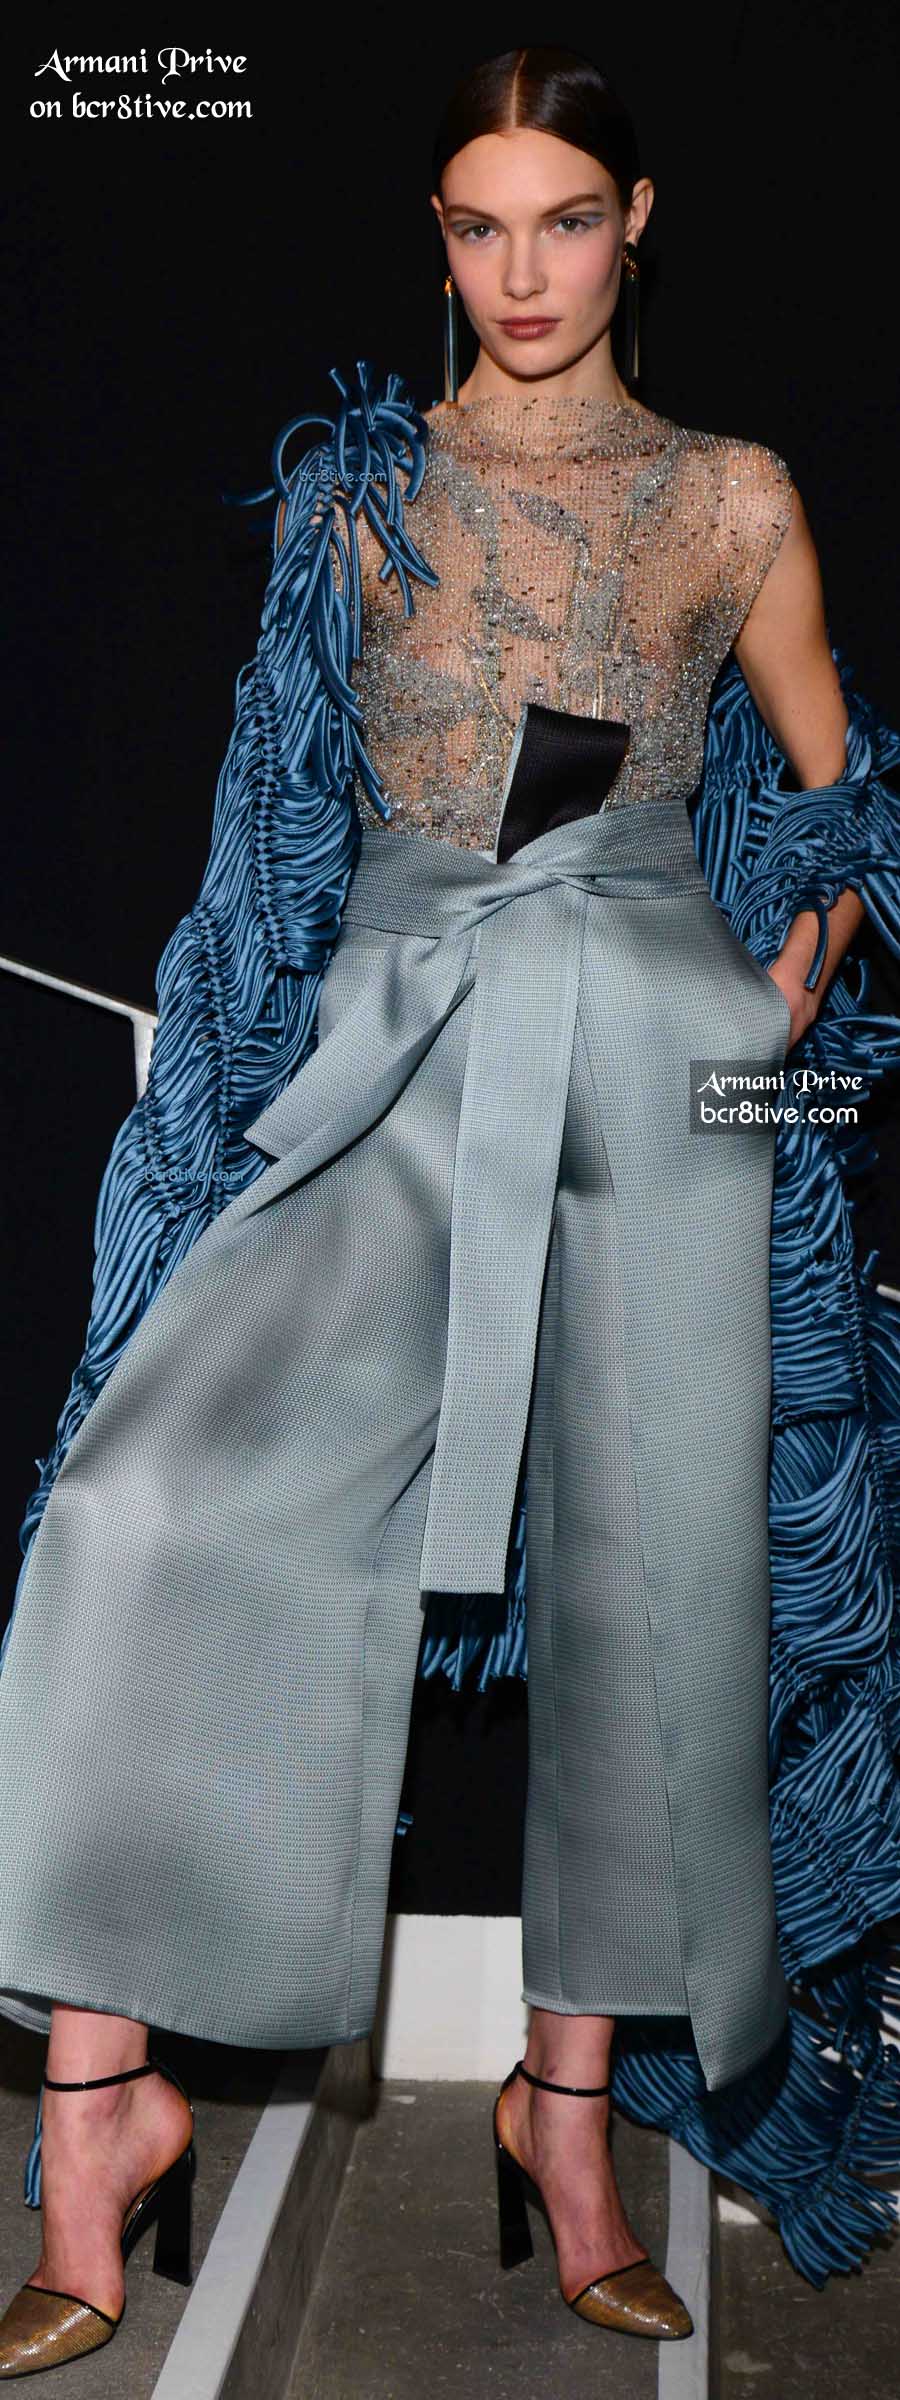 Armani Privé Spring 2015 Couture